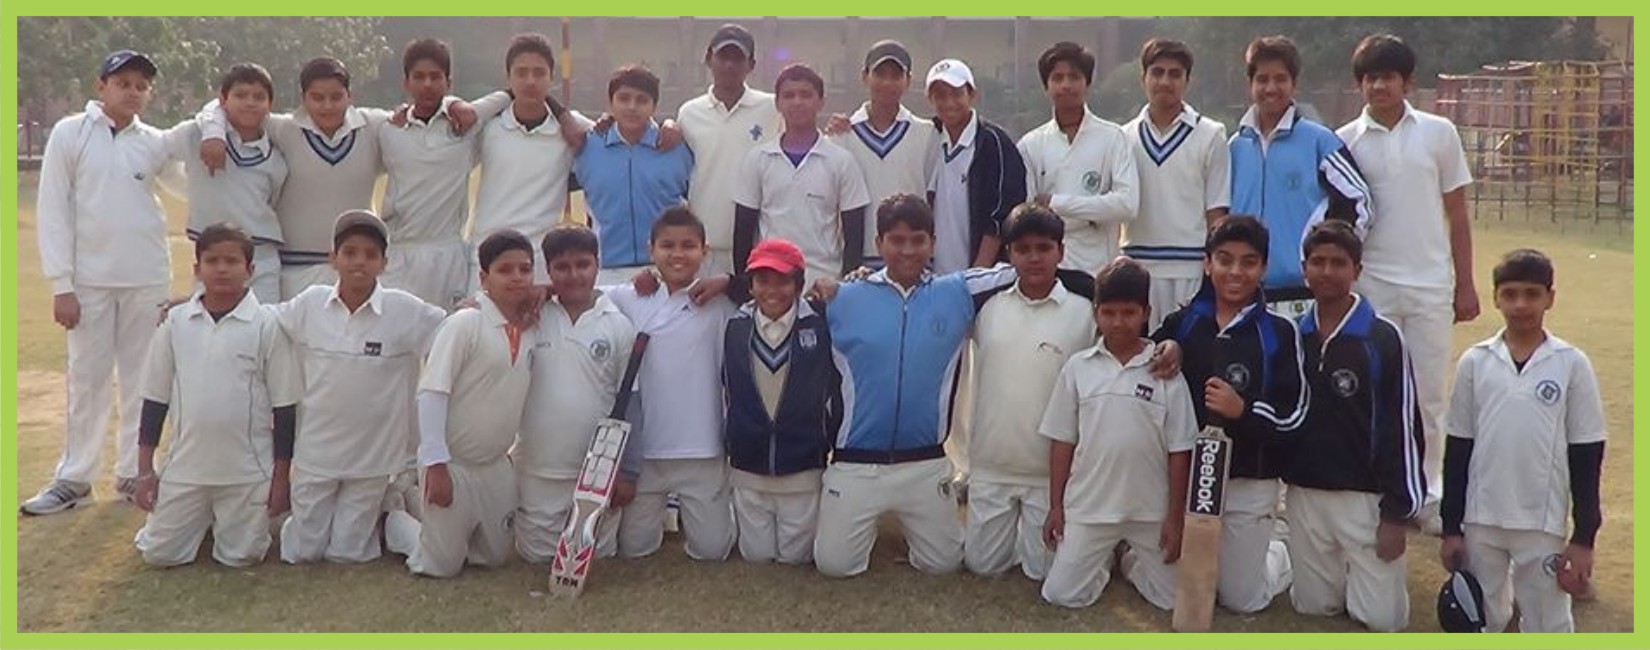 NIS Cricket Academy in Noida